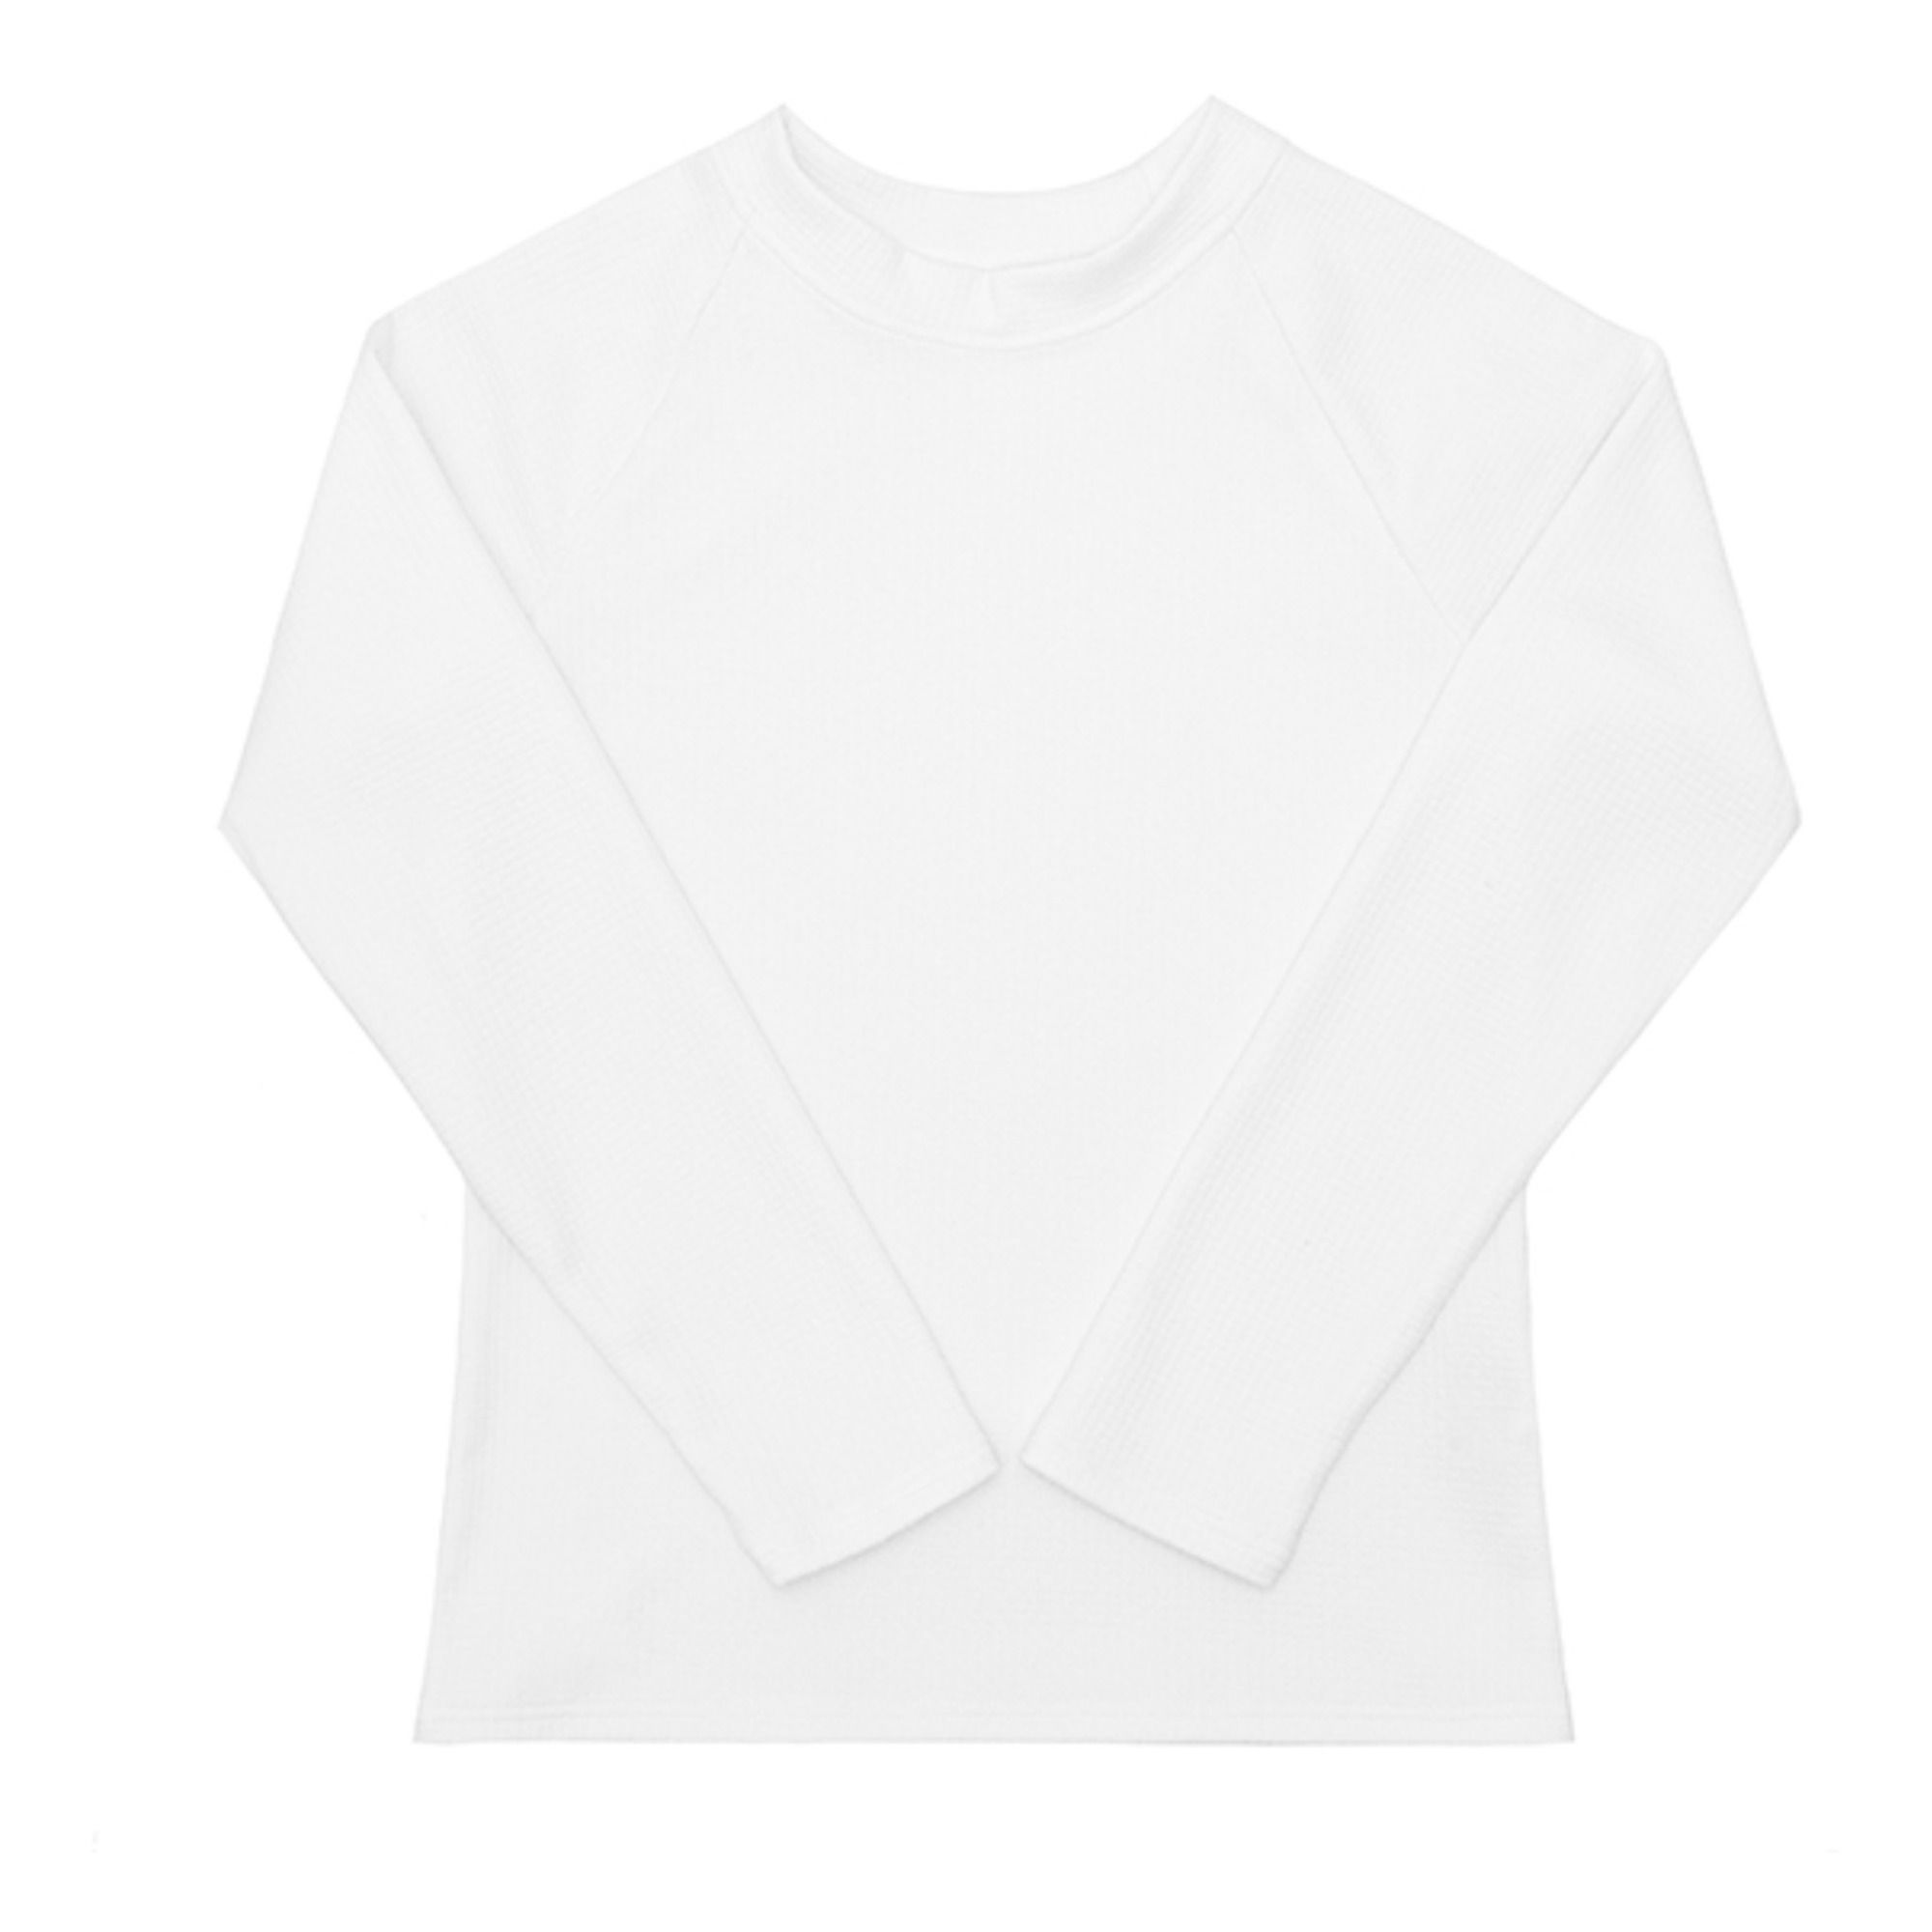 Minnow - T-Shirt Manches Longues Anti-UV - Fille - Blanc